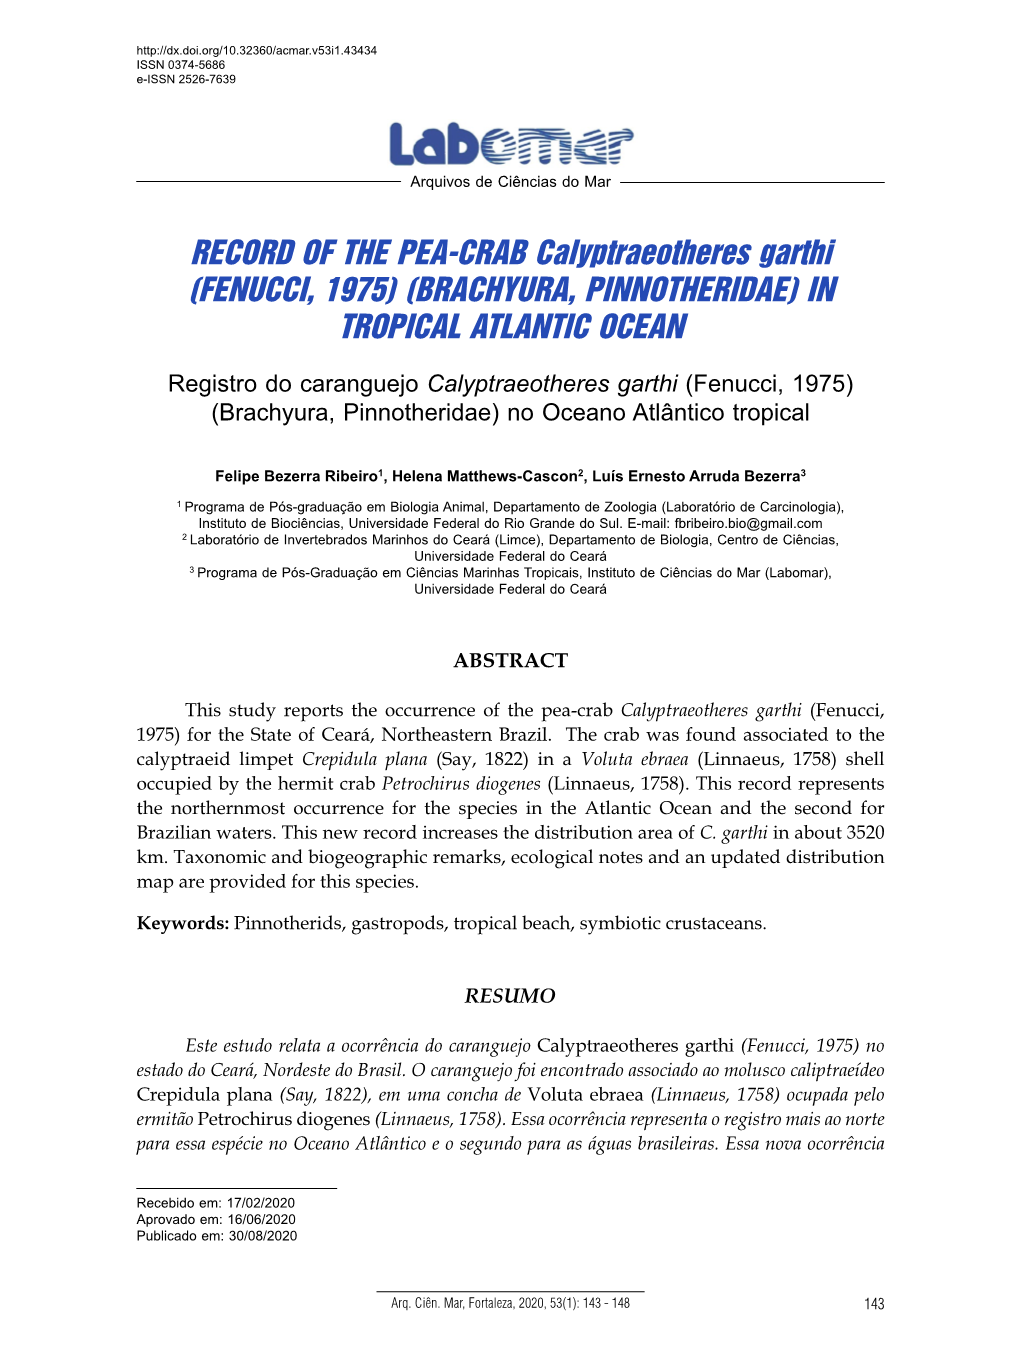 RECORD of the PEA-CRAB Calyptraeotheres Garthi (FENUCCI, 1975) (BRACHYURA, PINNOTHERIDAE) in TROPICAL ATLANTIC OCEAN